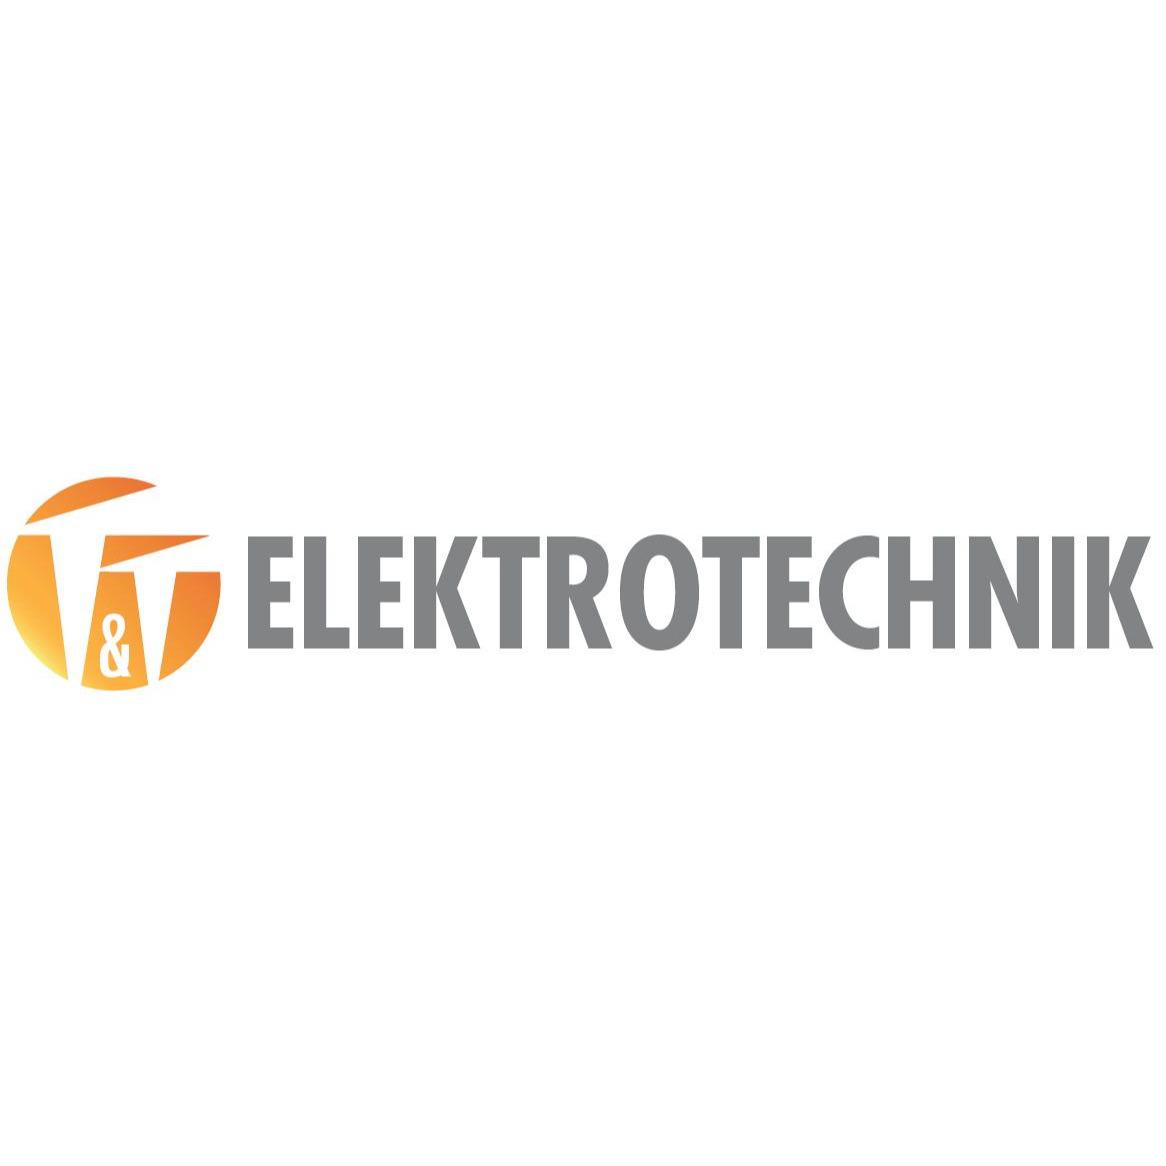 T & T Elektrotechnik OHG Herr Thomas Kienlein Logo